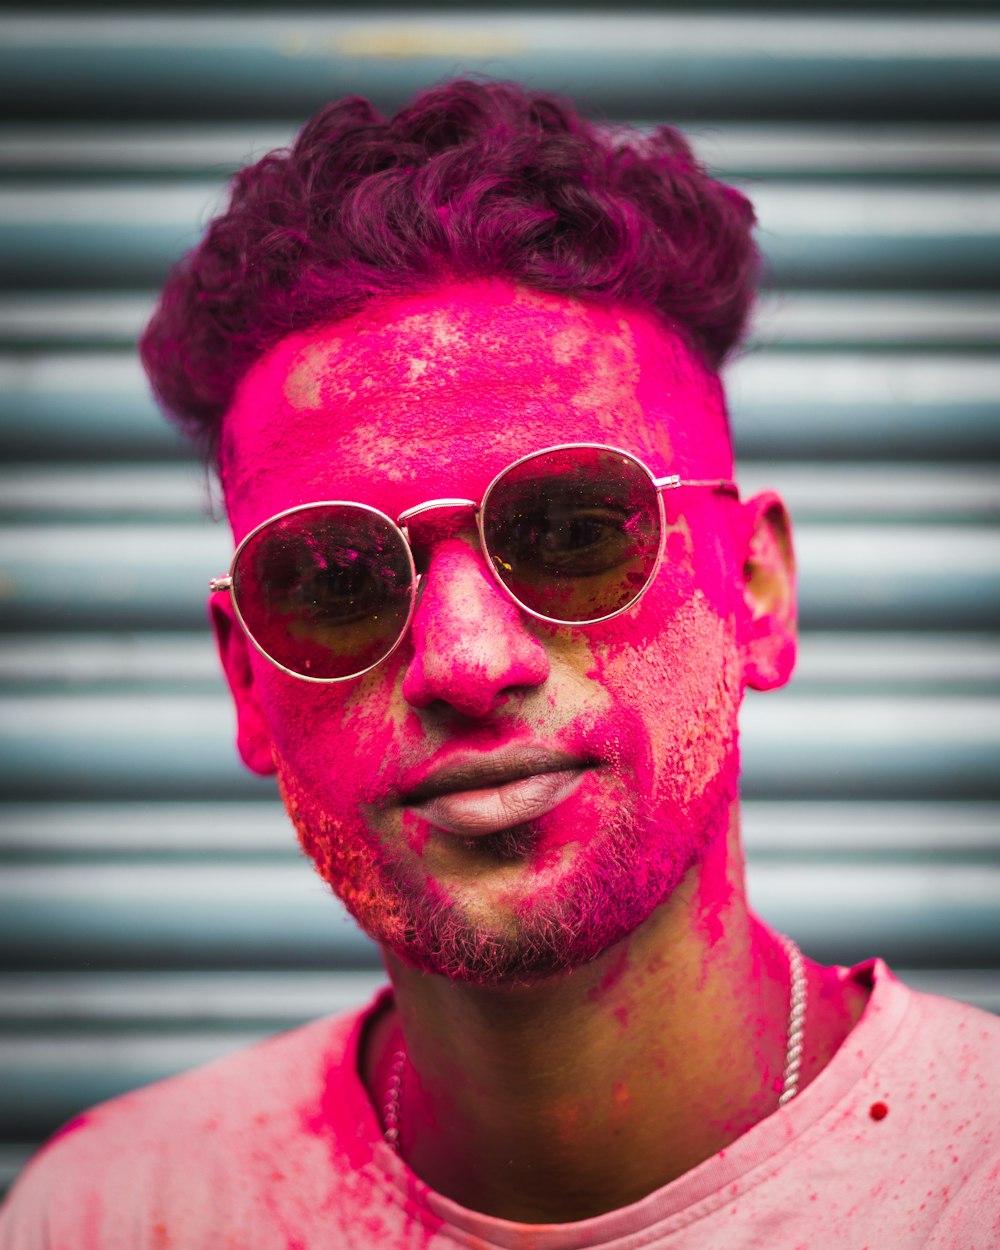 a man wearing sunglasses and a pink shirt